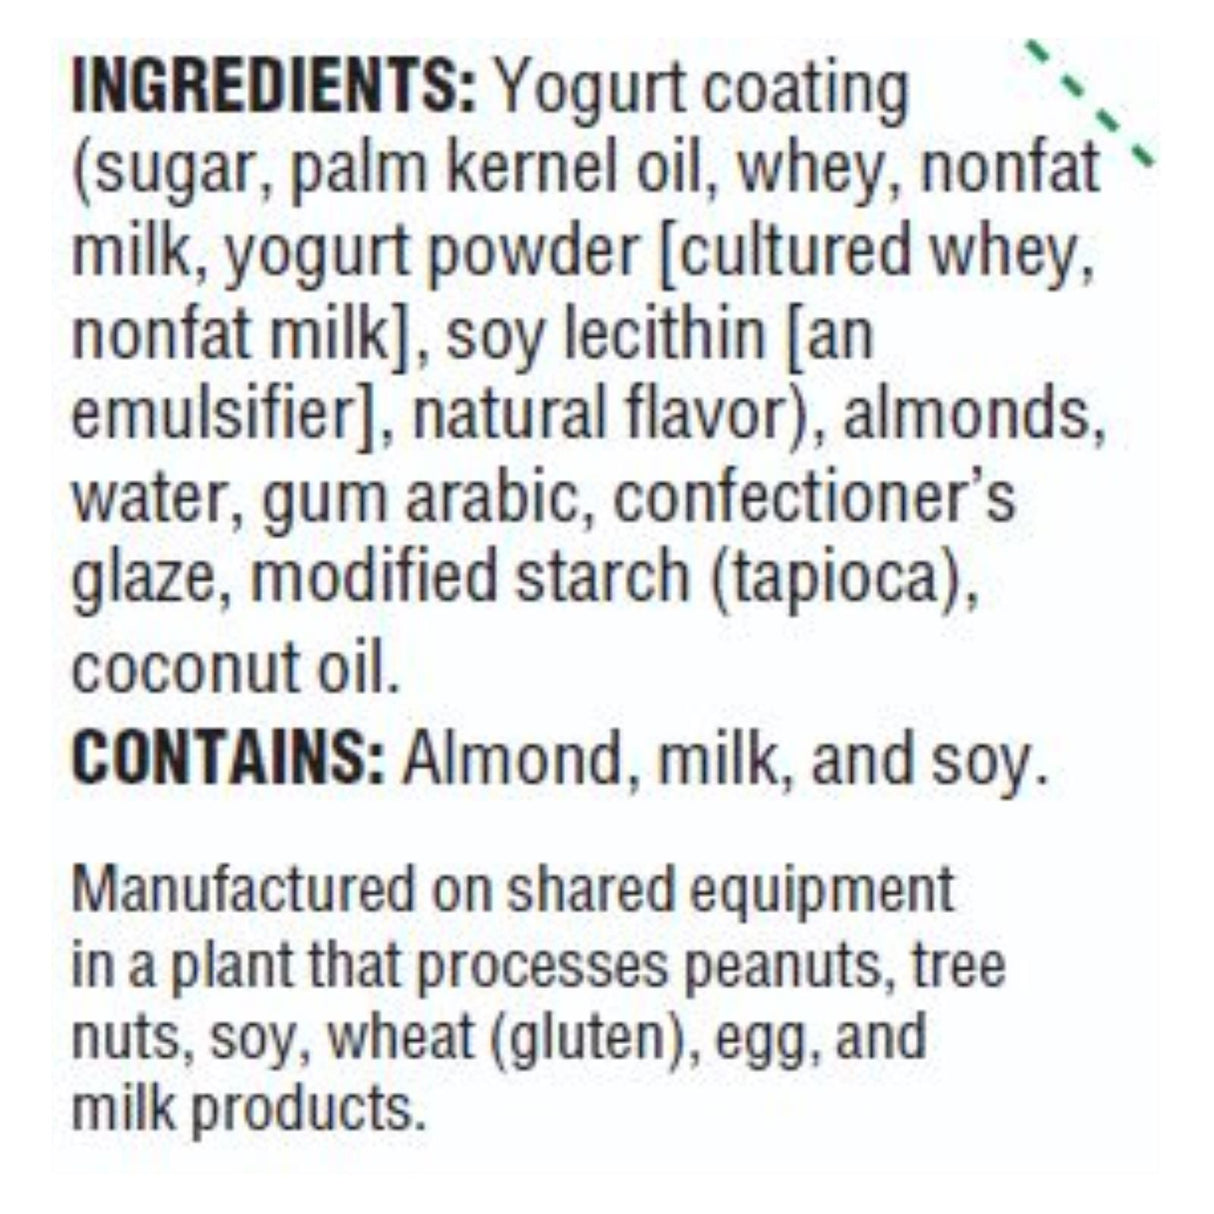 Woodstock Yogurt Almonds - 8.5 Oz. Case of 8 - Rich, Creamy, Vegan Snack - Cozy Farm 